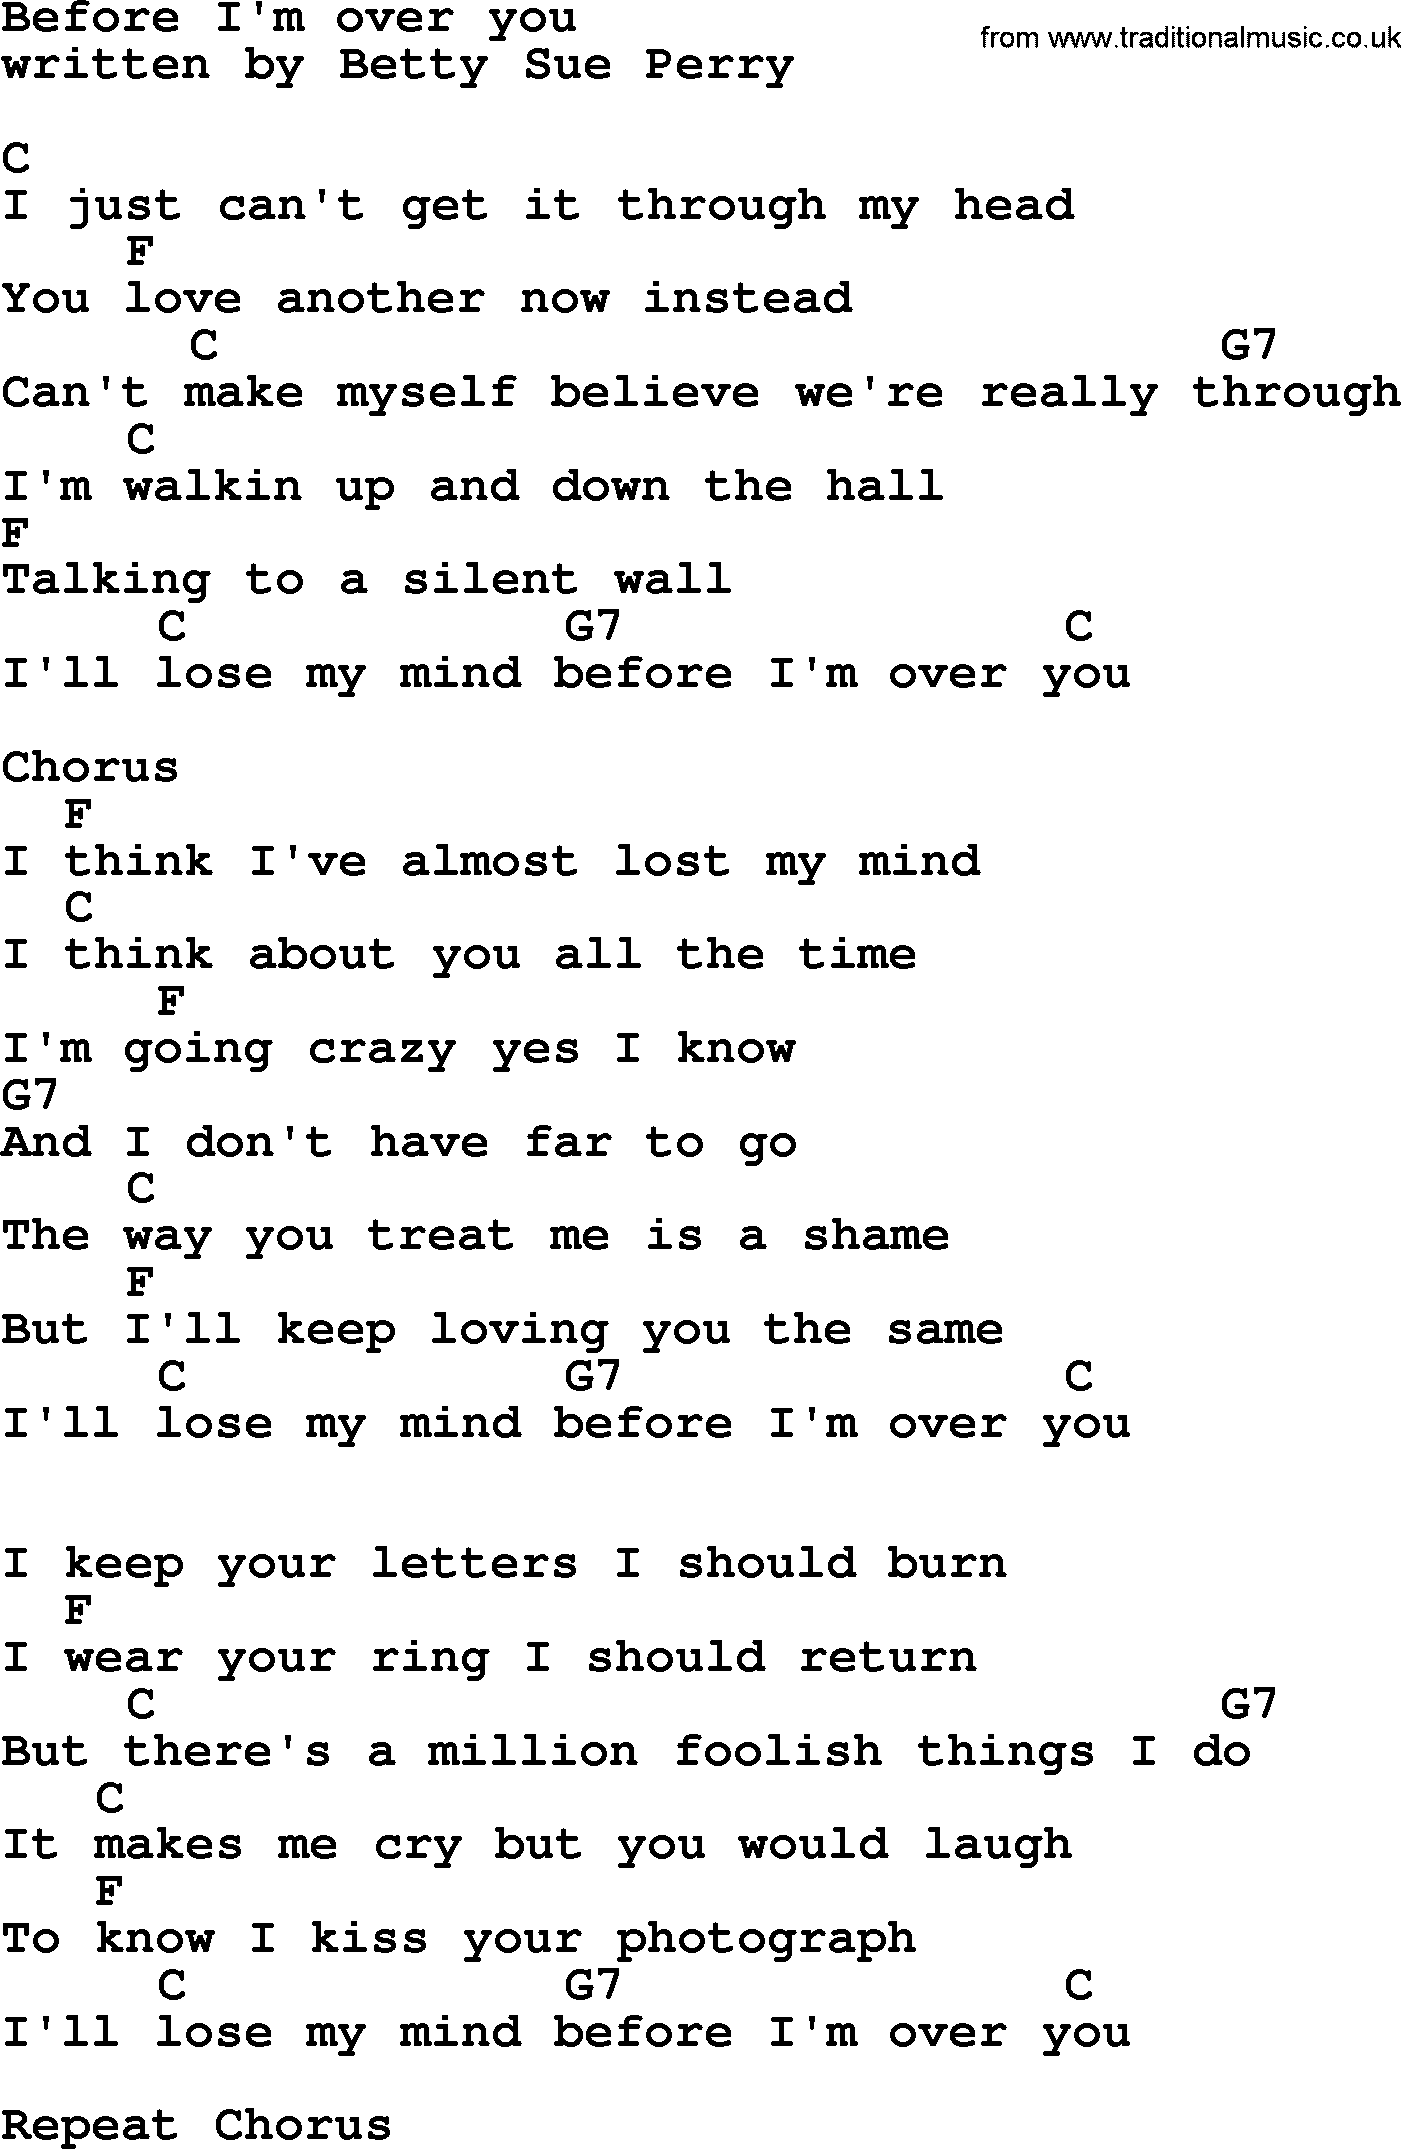 Loretta Lynn song: Before I'm Over You lyrics and chords